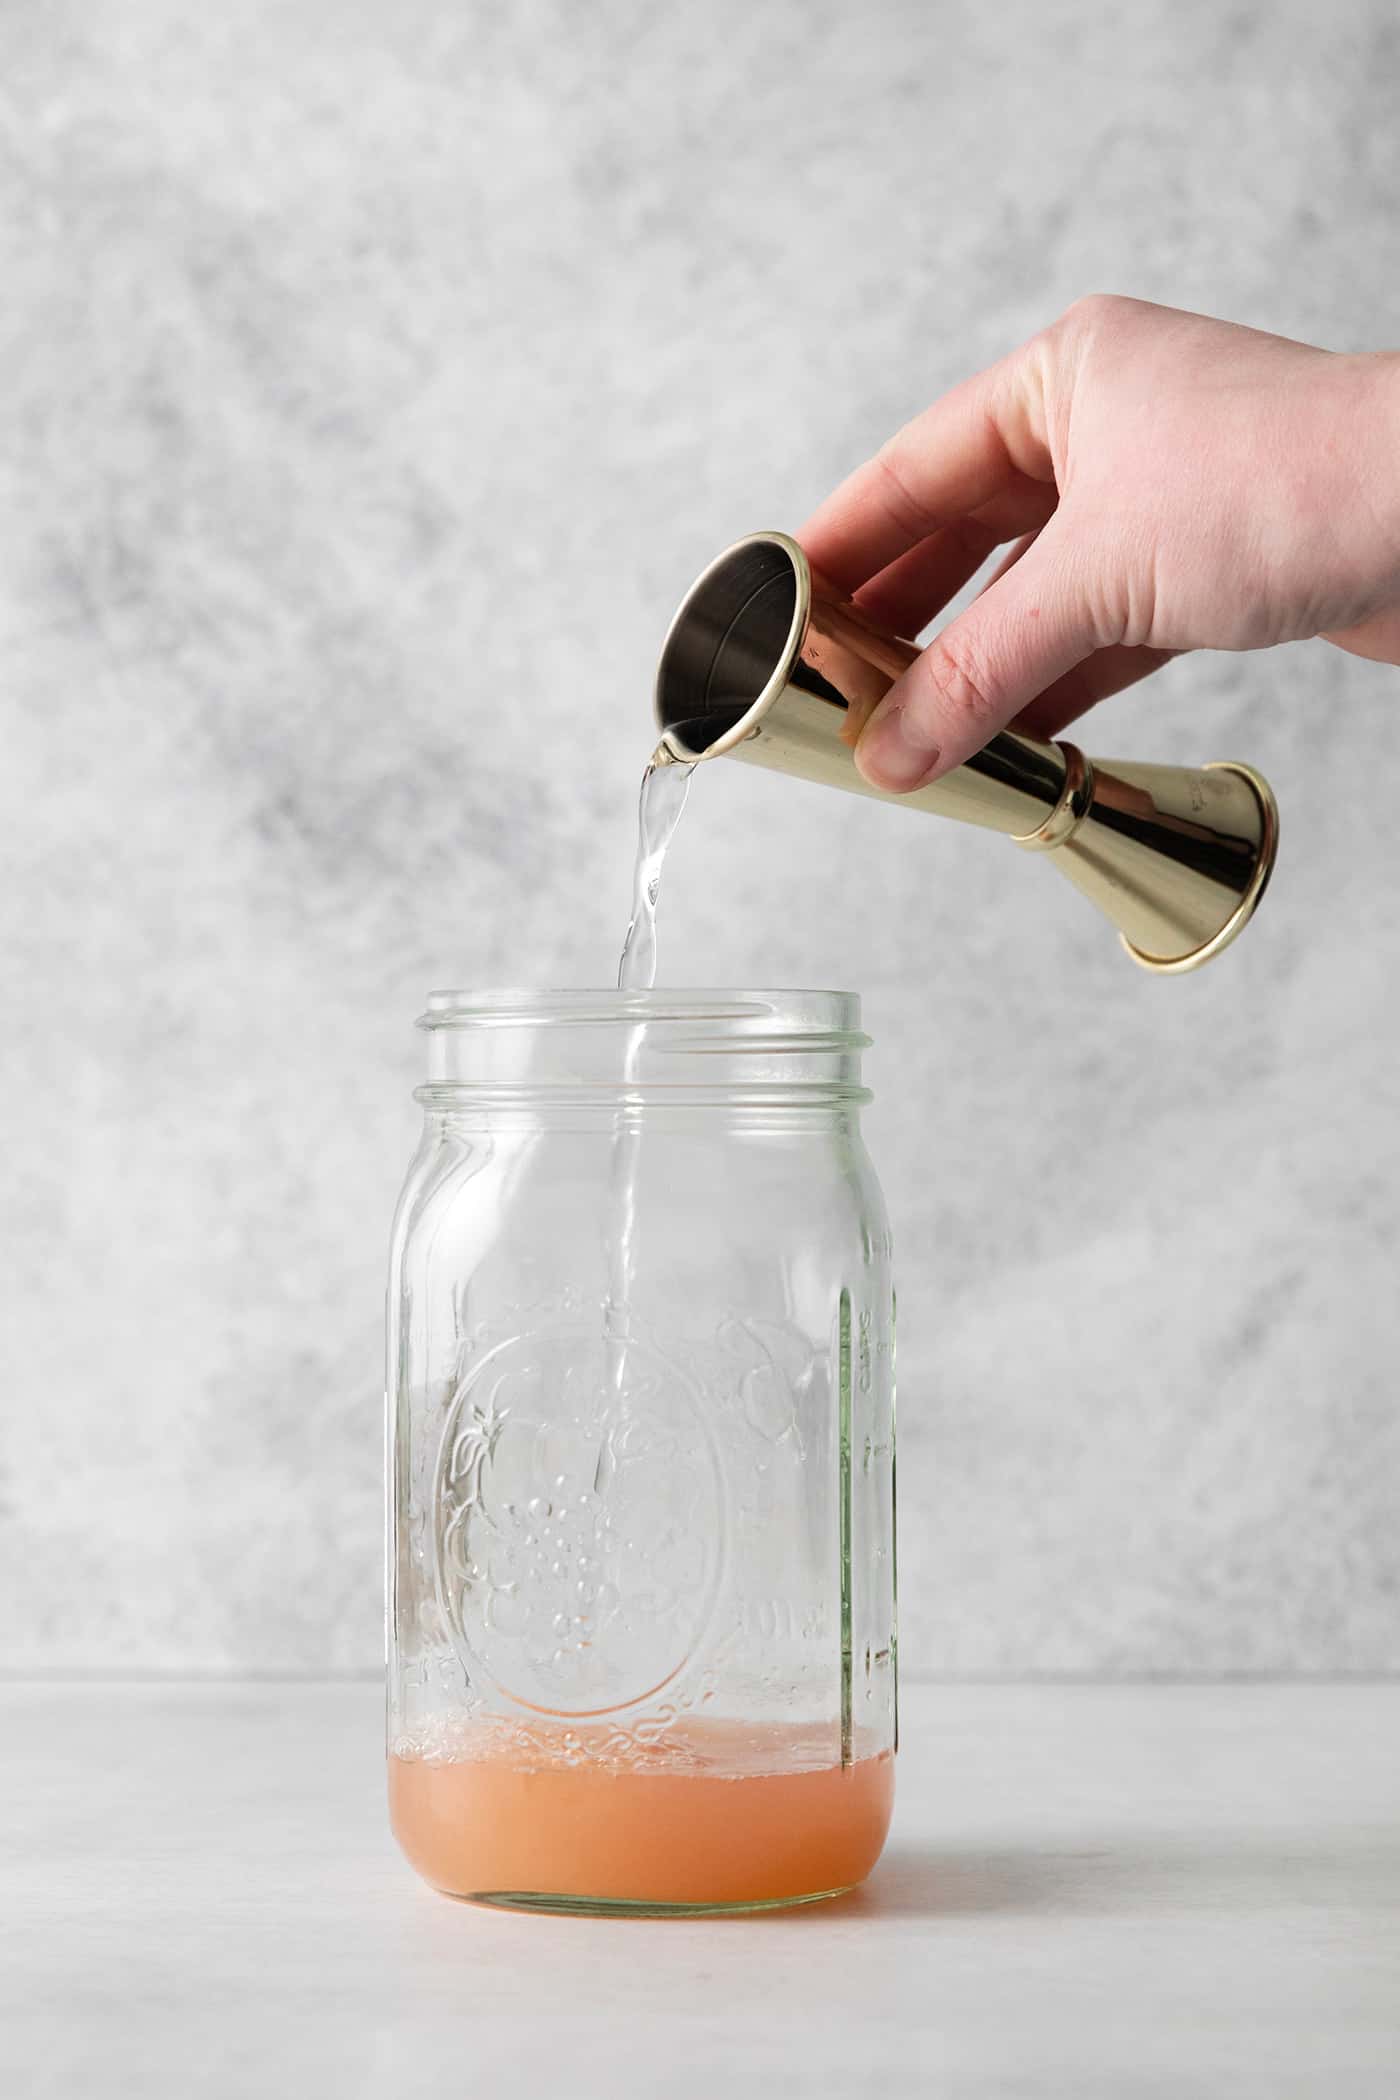 A hand pouring gin into a mason jar